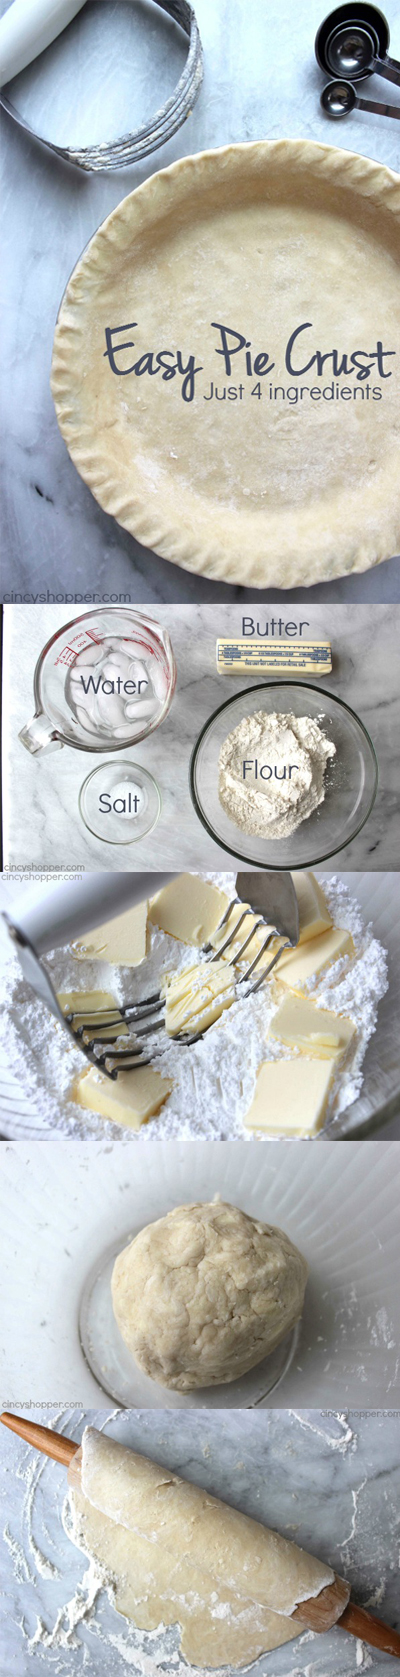 All Created - 4 Ingredient Pie Crust